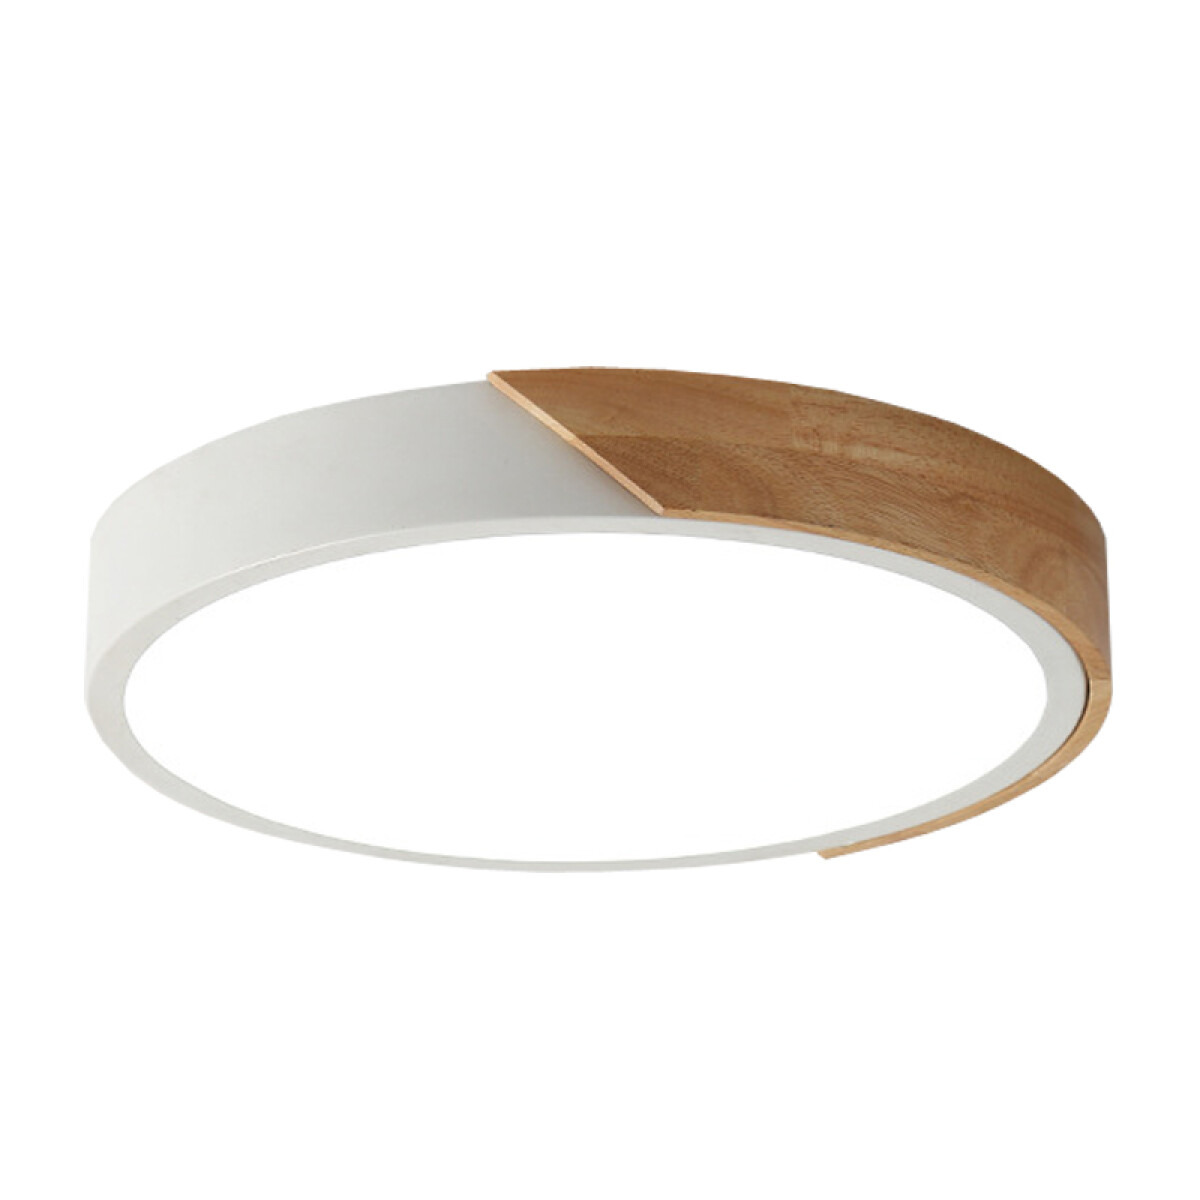 Plafón led de diseño circular en madera y aluminio blanco mate 20w - Luz neutra 